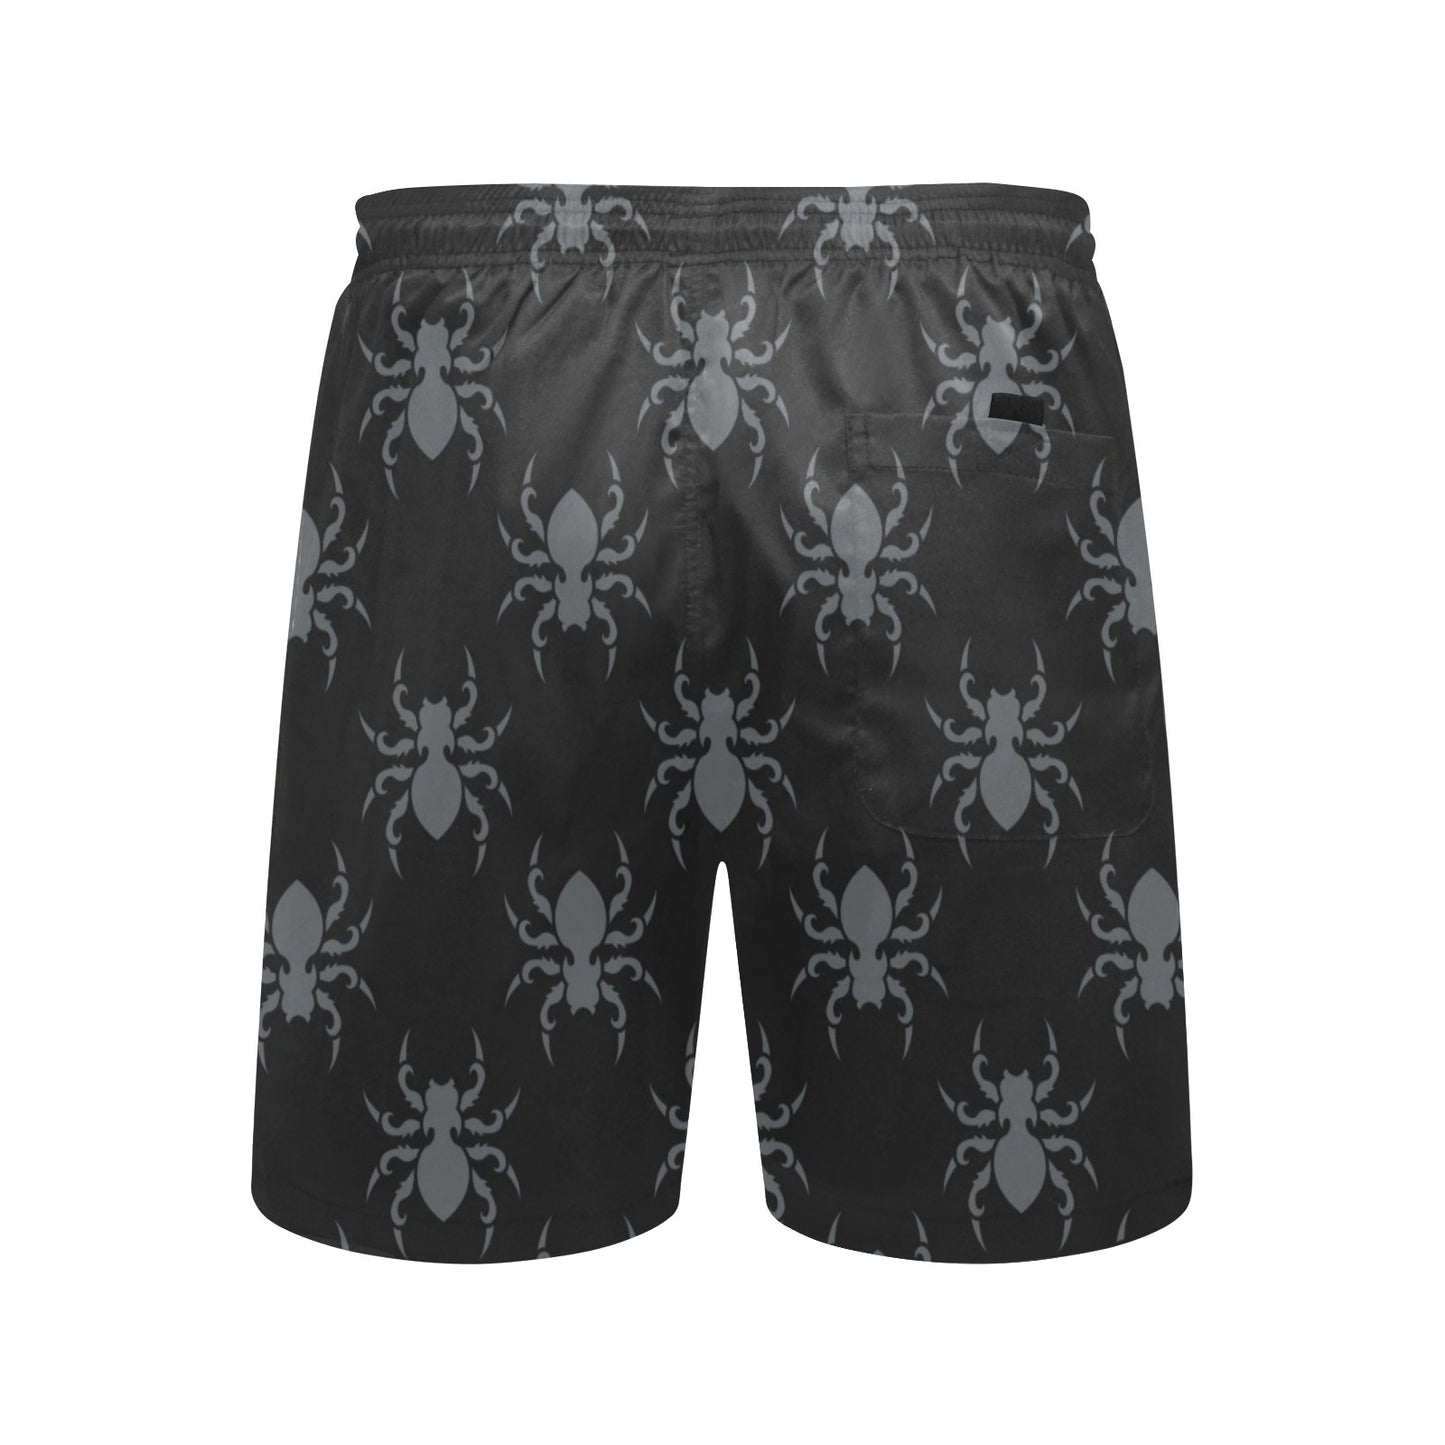 Gothic Spiders Beach Shorts